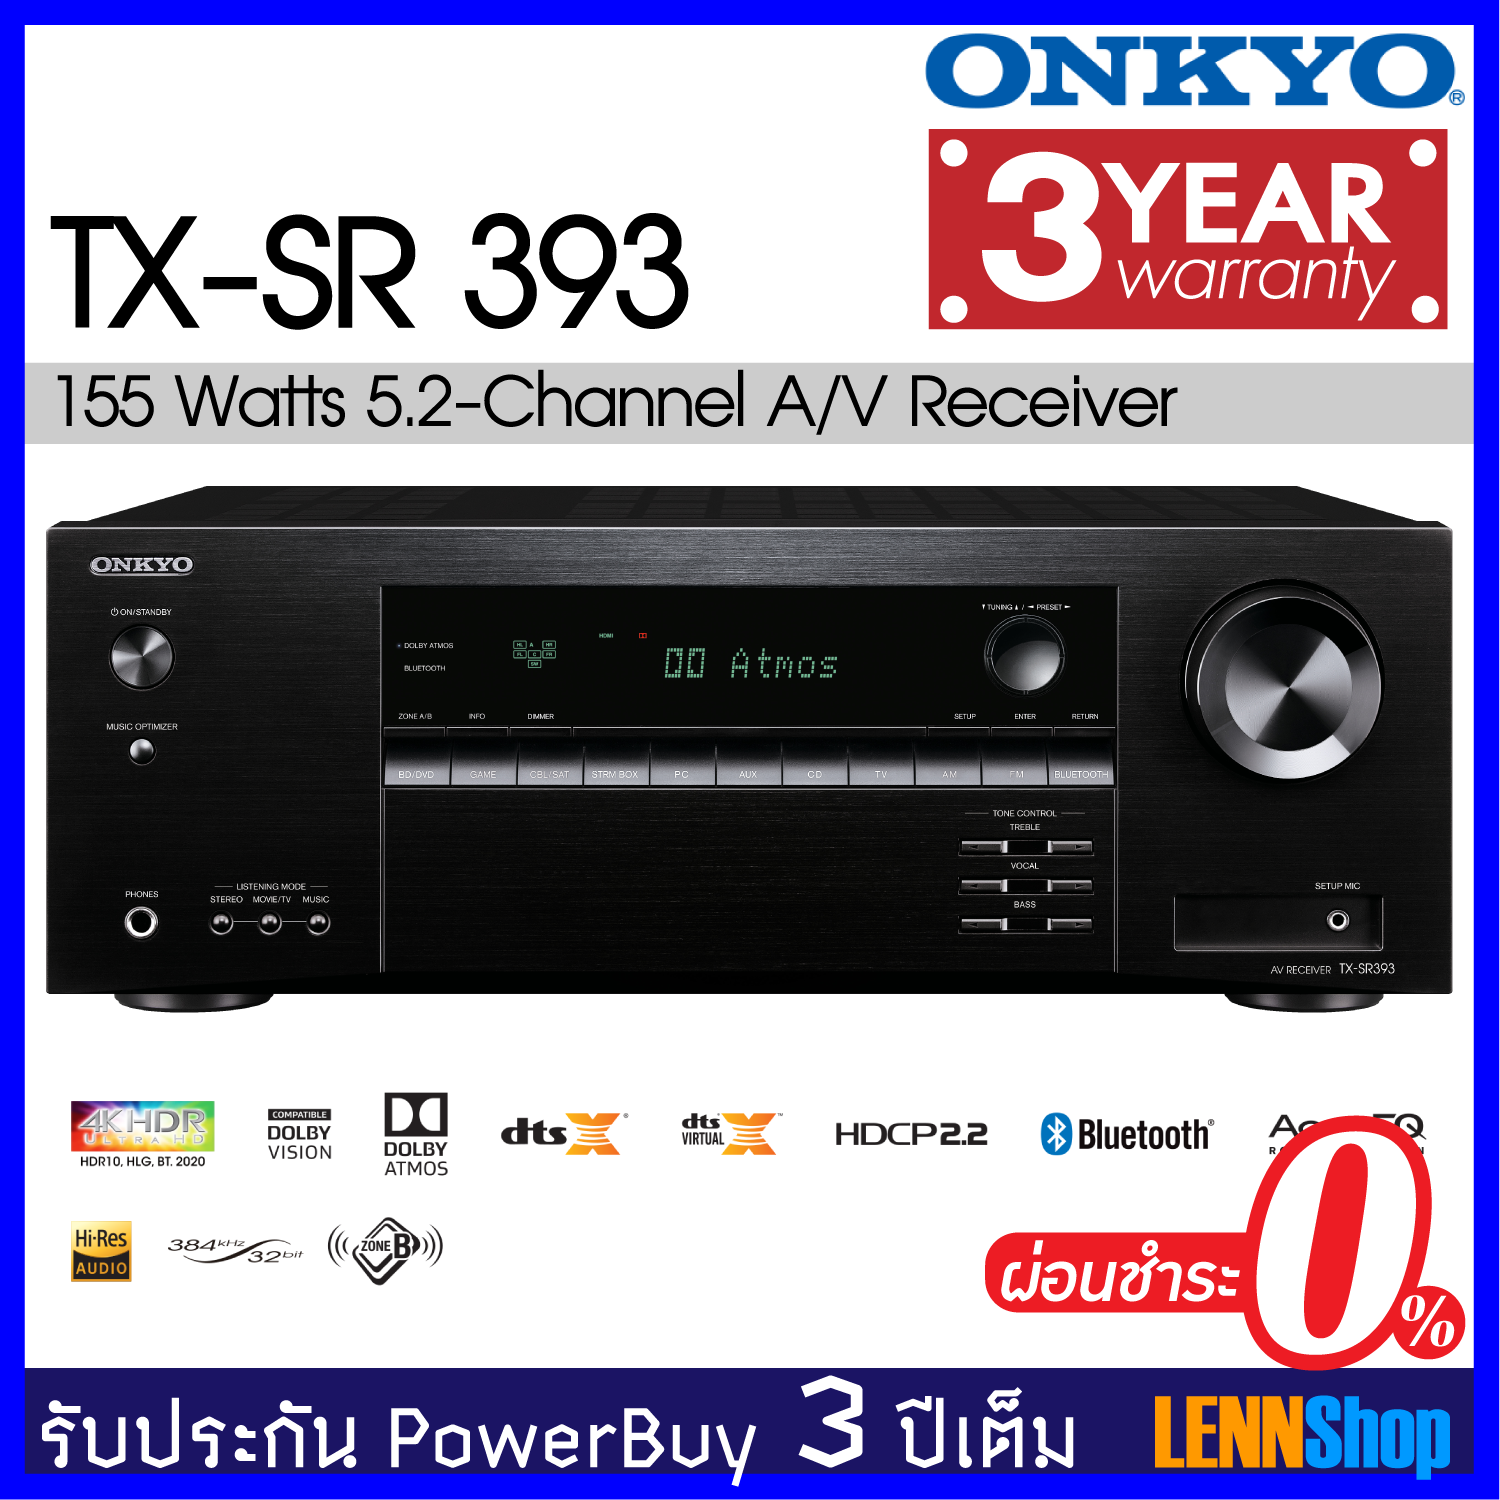 ONKYO TX-SR393 ผ่อน 0% : 5.2-Channel 155Watt A/V Receiver 3 Year Warranty By Powerbuy Thailand / ONKYO TXSR393 / lennshop / ONKYO 393 /ONKYO TX SR393 รับประกัน 3ปี ศูนย์ PowerBuy โดย LENNSHOP ตัวแทนจำหน่ายอย่างเป็นทางการ / ONKYO